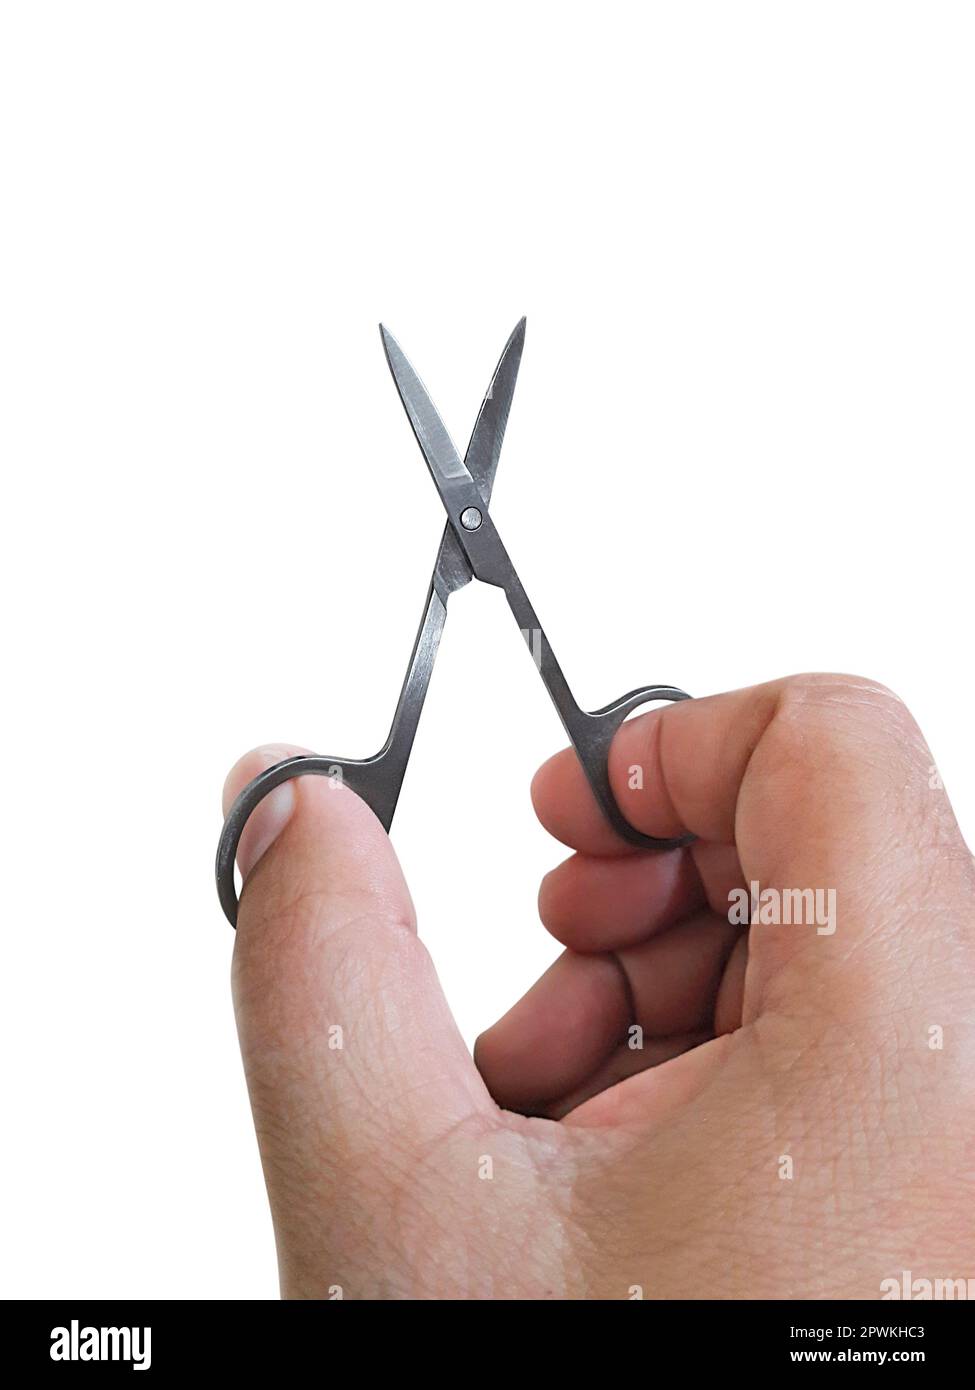 Scissors Metal Cutting Equipment Monochrome Vector Stock